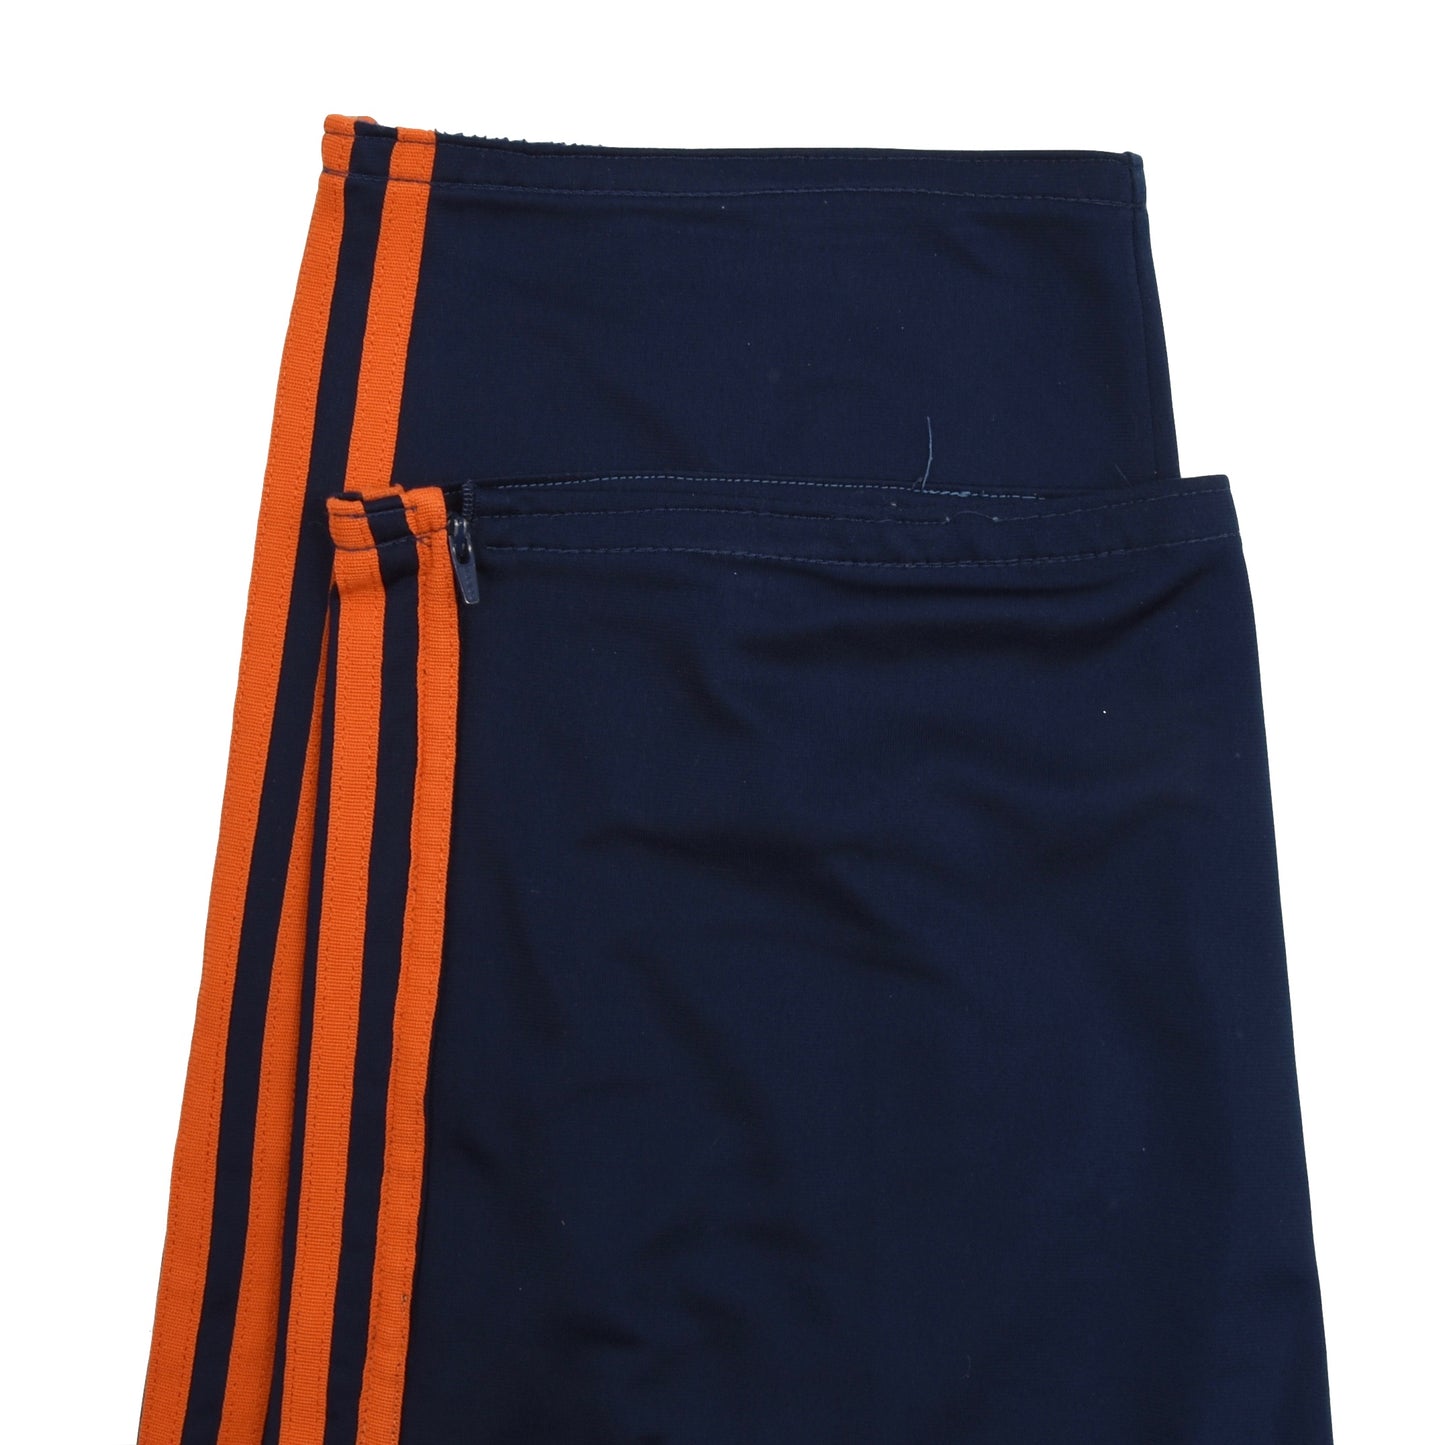 Vintage '90s Adidas Track Pants Size D8/US L - Navy Blue